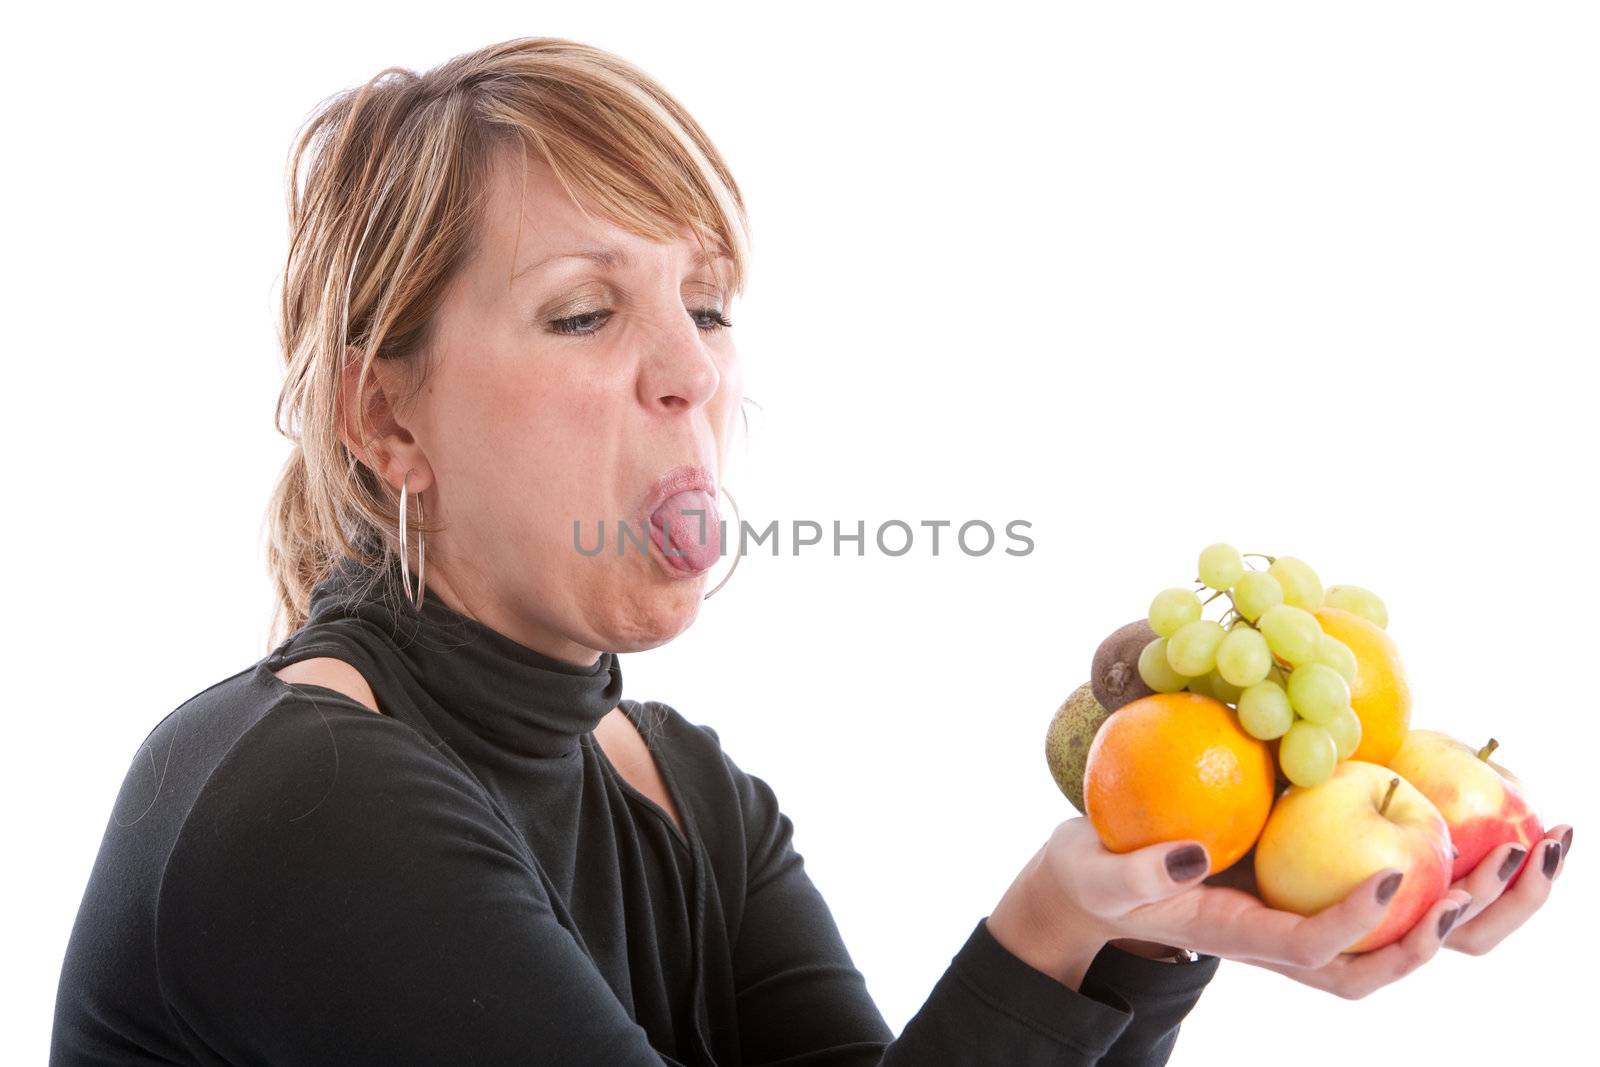 Disliking fruit by Fotosmurf